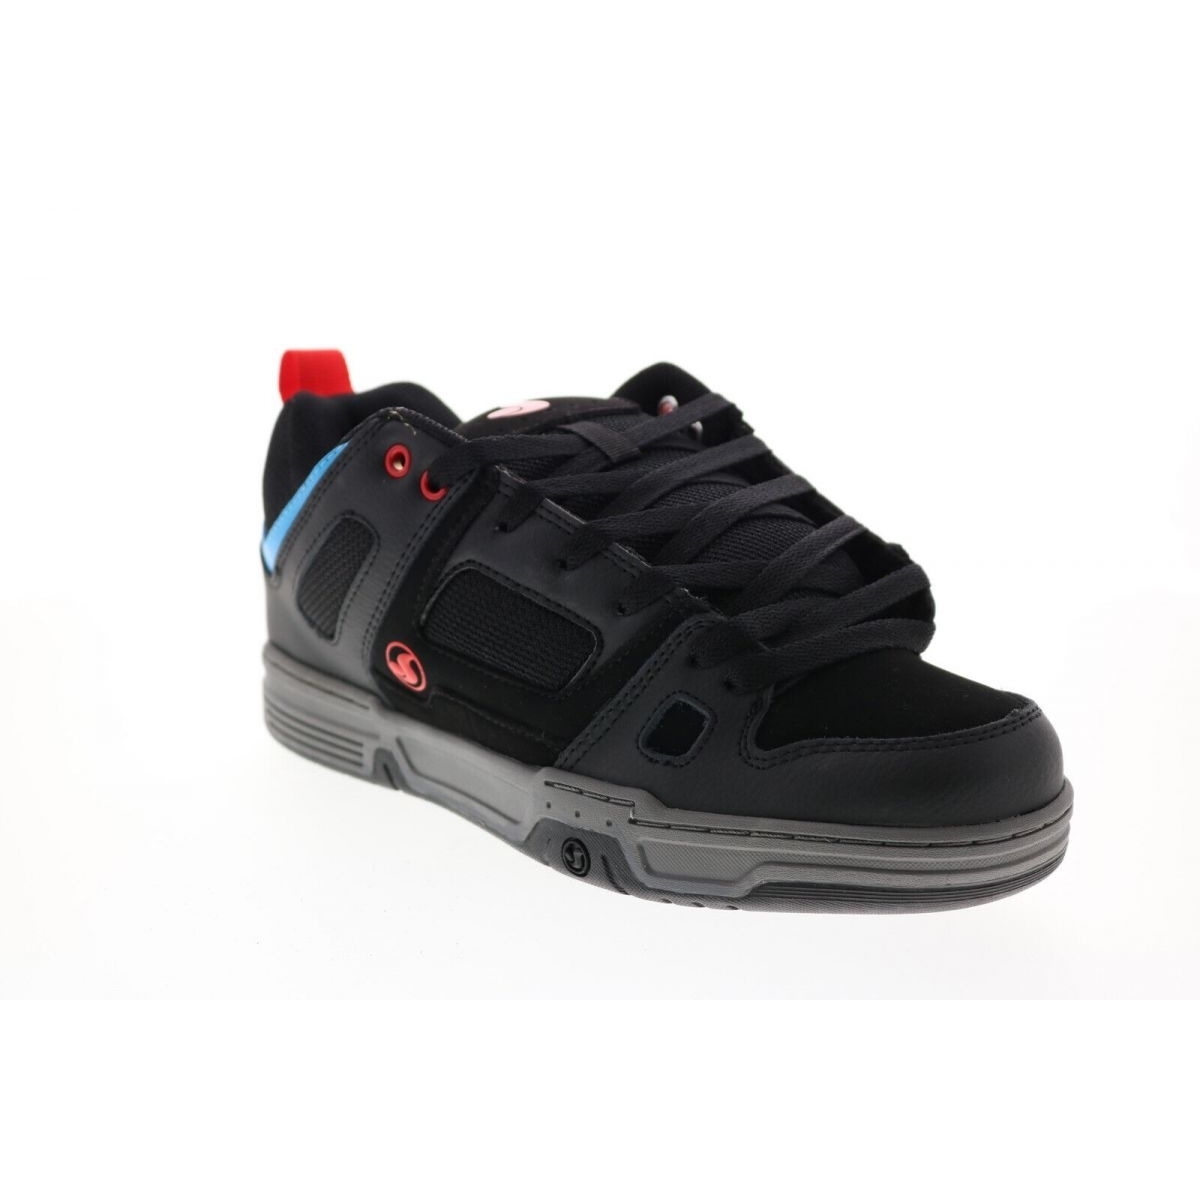 DVS Men's Gambol Skate Shoe 0 BLACK FIERY RED BLUE NUBUCK - BLACK FIERY RED BLUE NUBUCK, 13